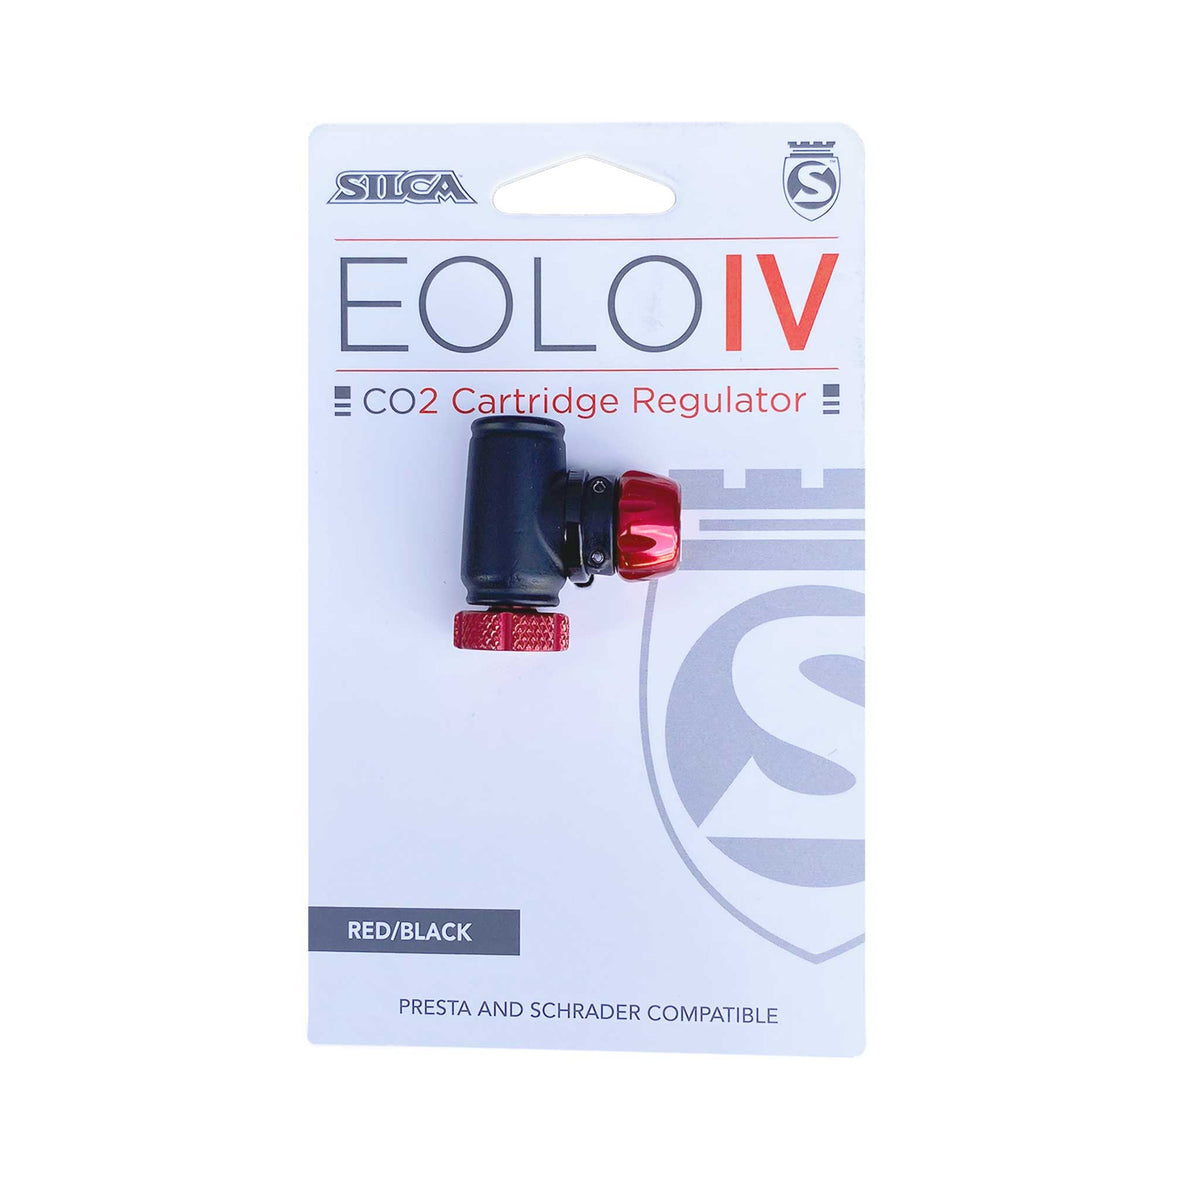 Silca EOLO IV CO2 Regulator